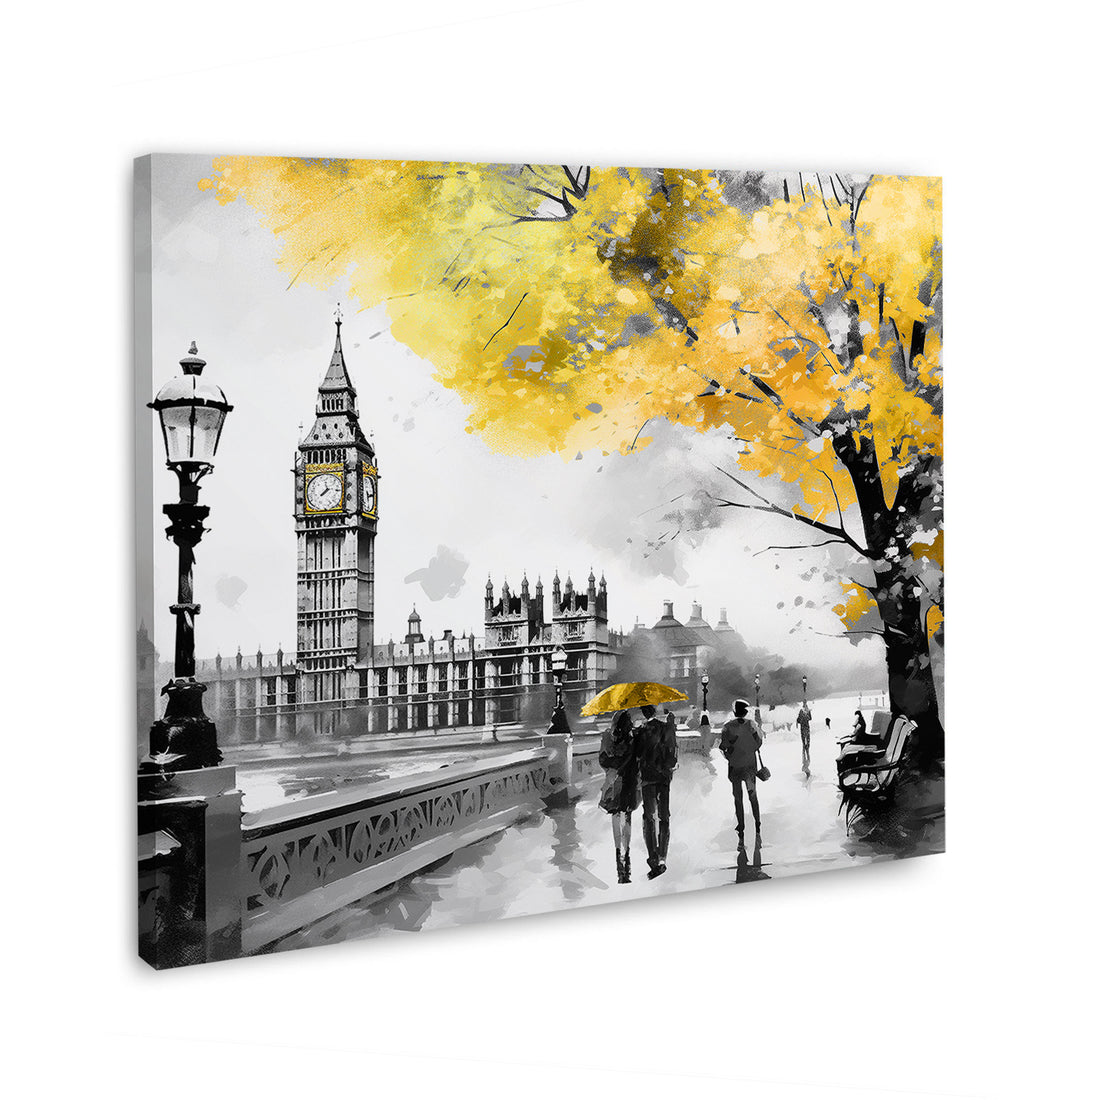 Wandbild London, Big Ben schwarz weiß, goldener Baum